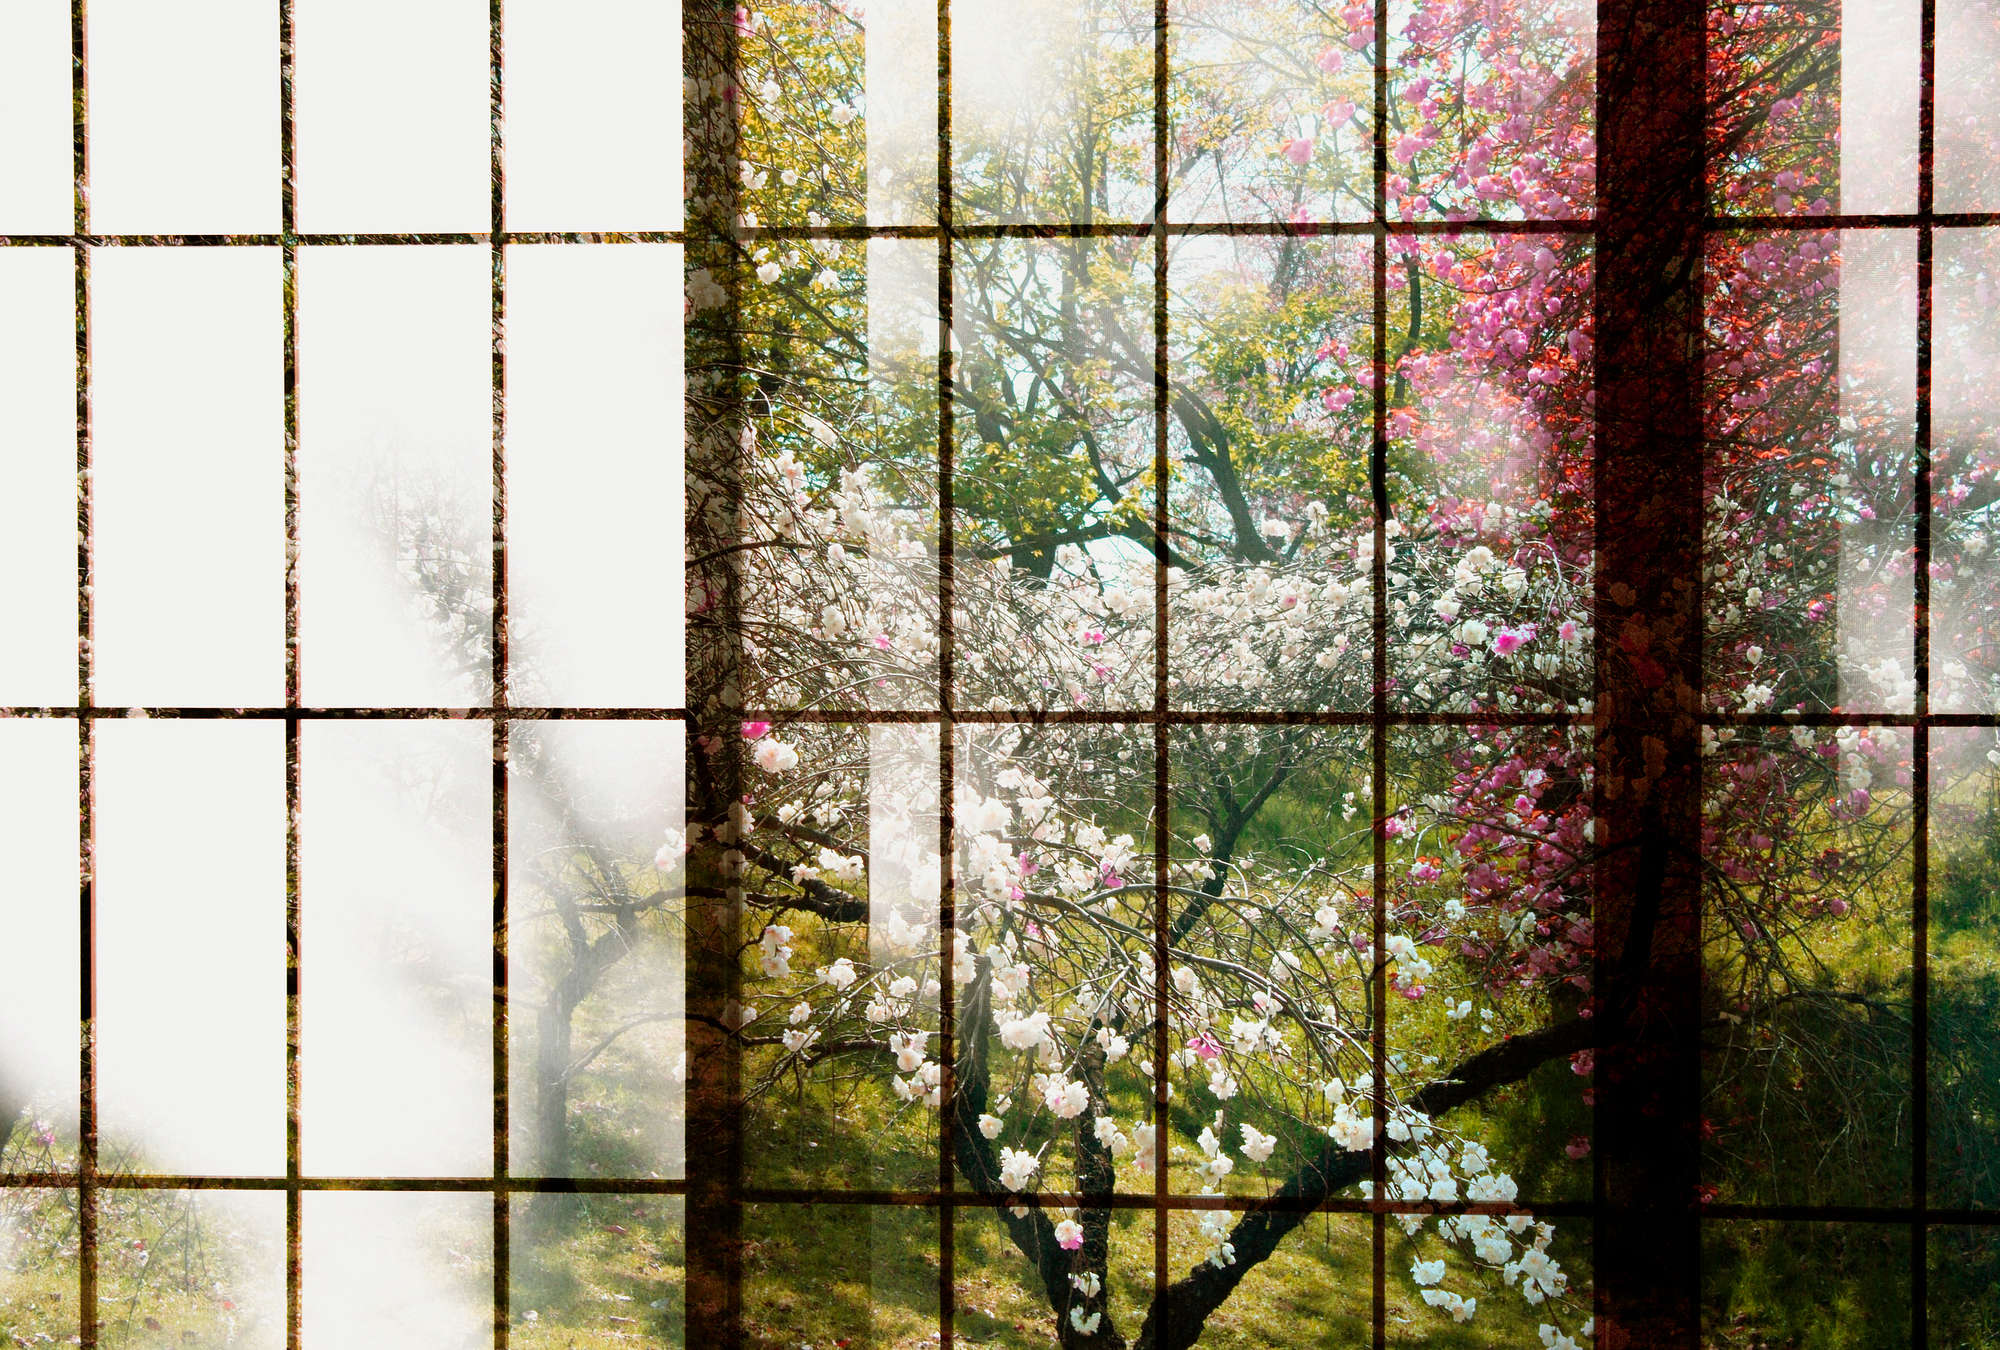             Orchard 1 - Fototapete, Fenster mit Garten Ausblick – Grün, Rosa | Mattes Glattvlies
        